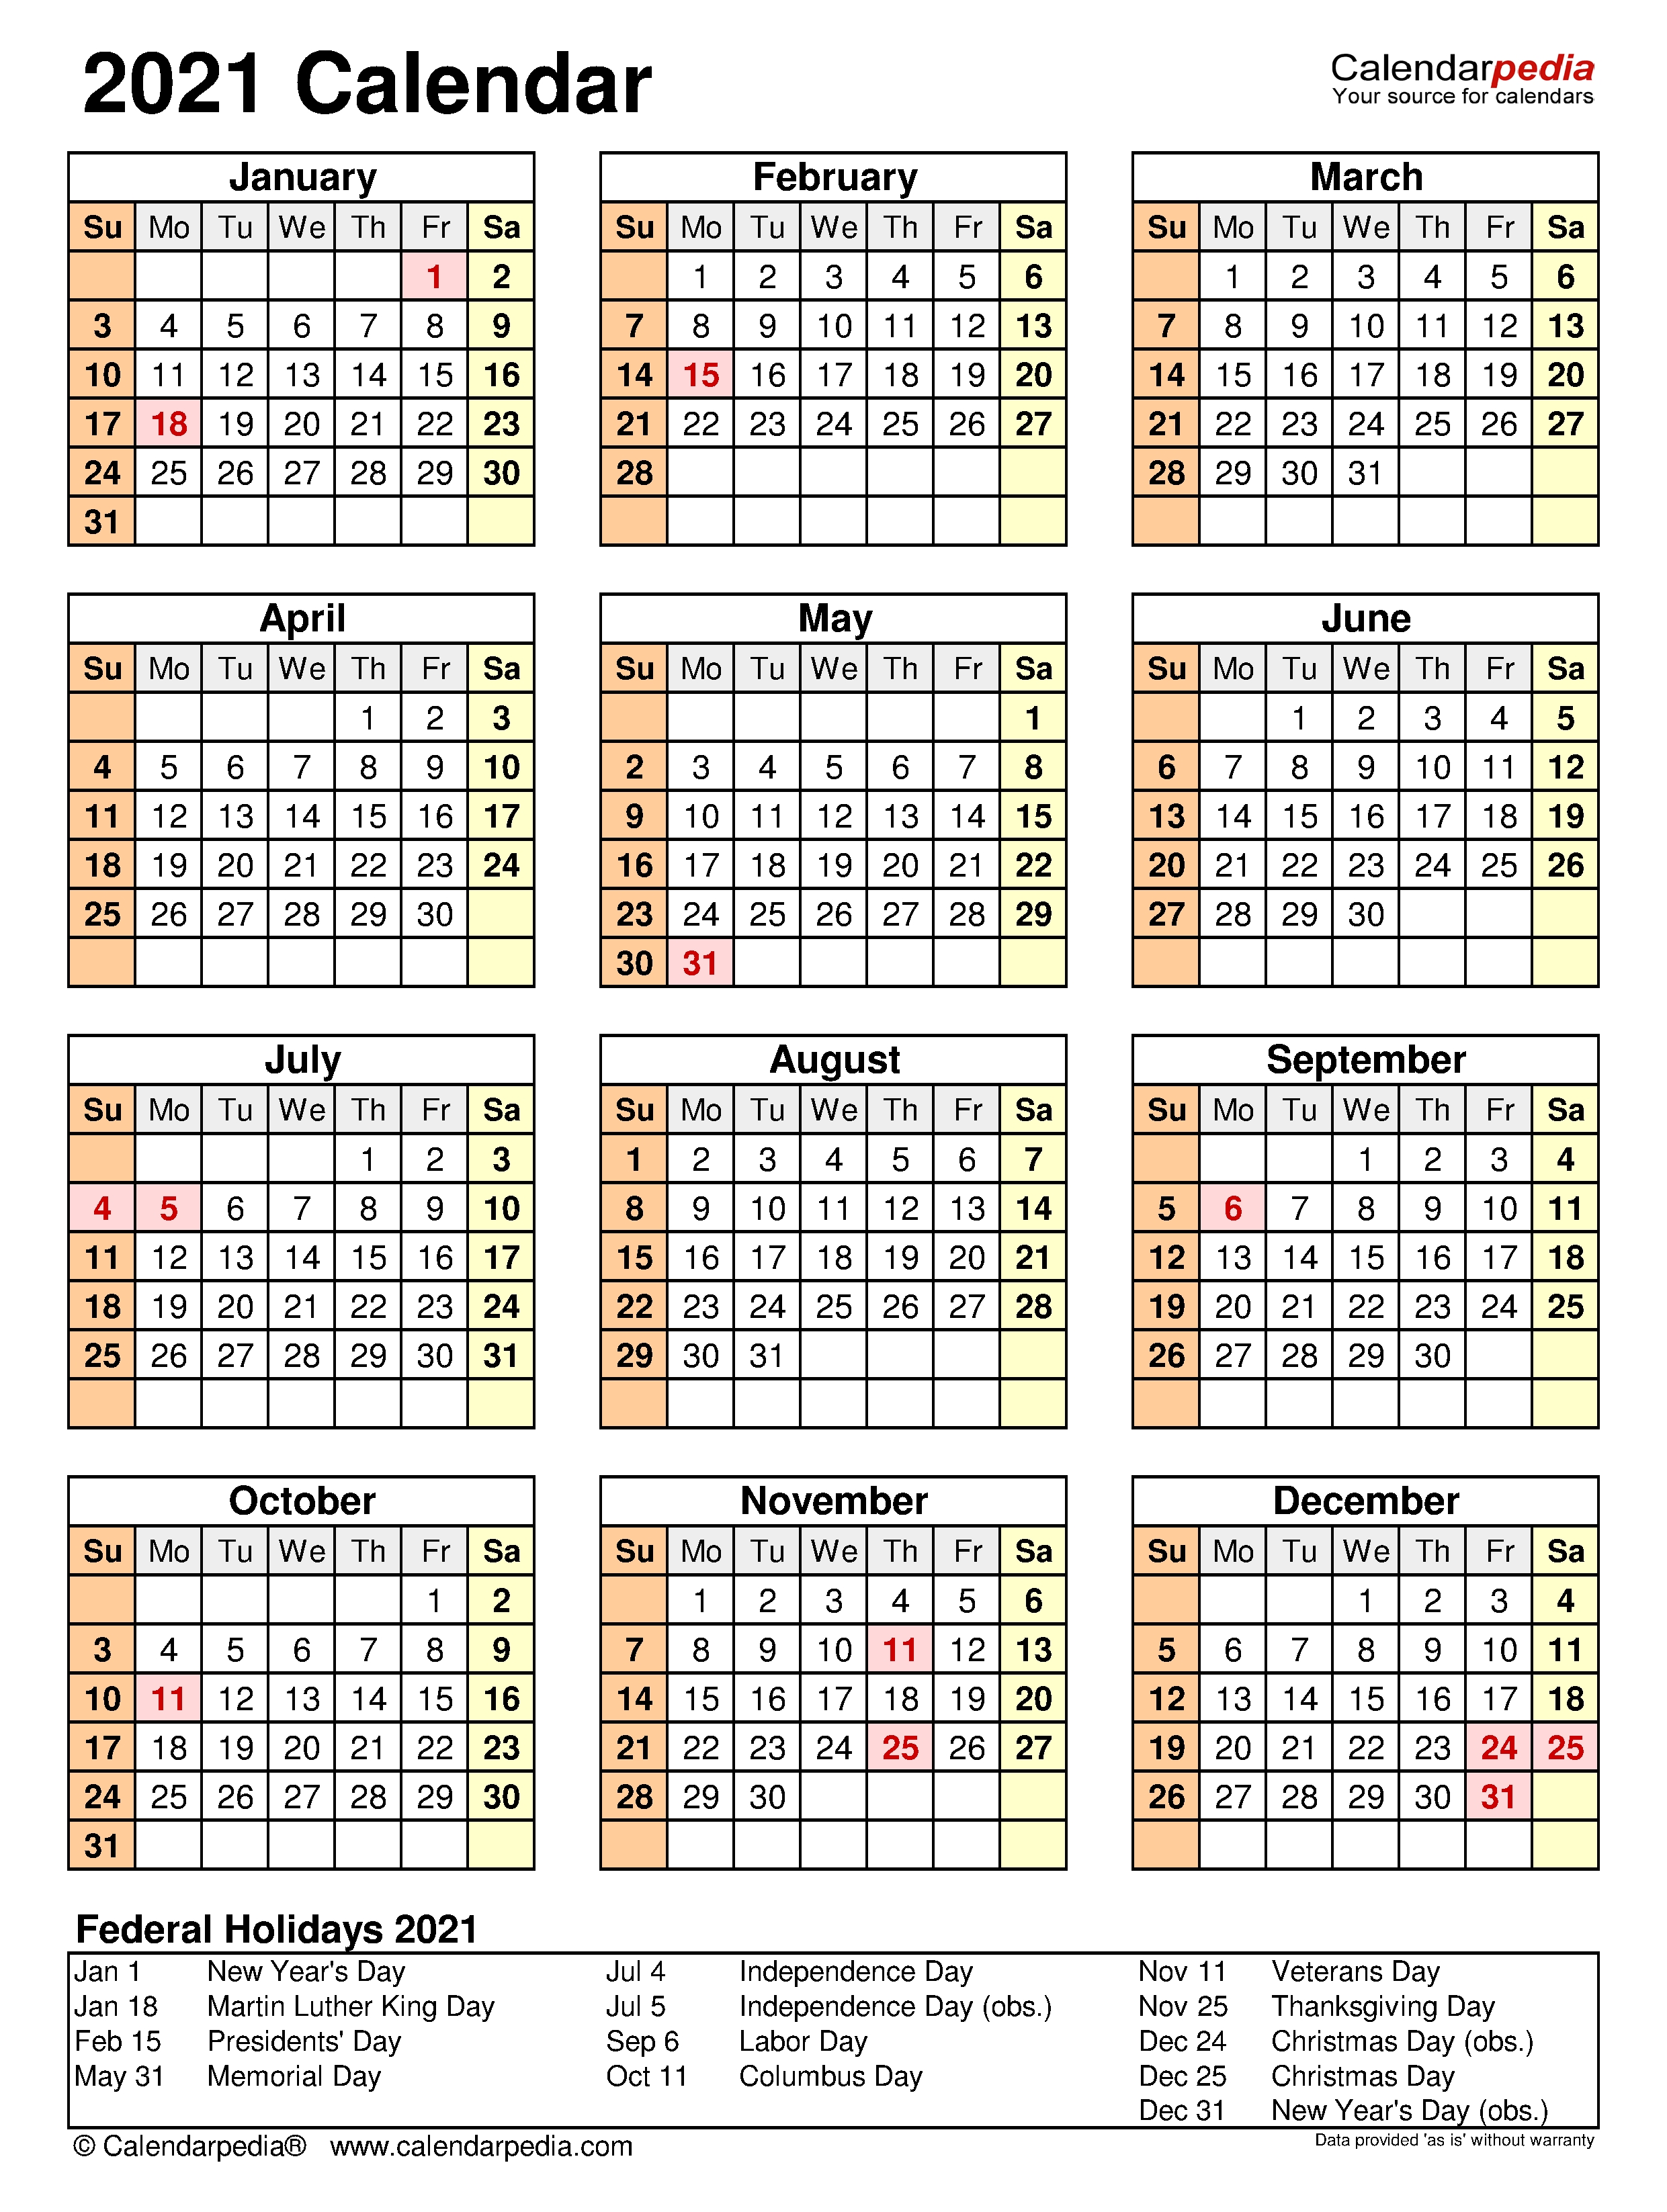 2021 Calendar - Free Printable Excel Templates - Calendarpedia Calendarpedia 2021 Printable Free Us Calendar Landscape